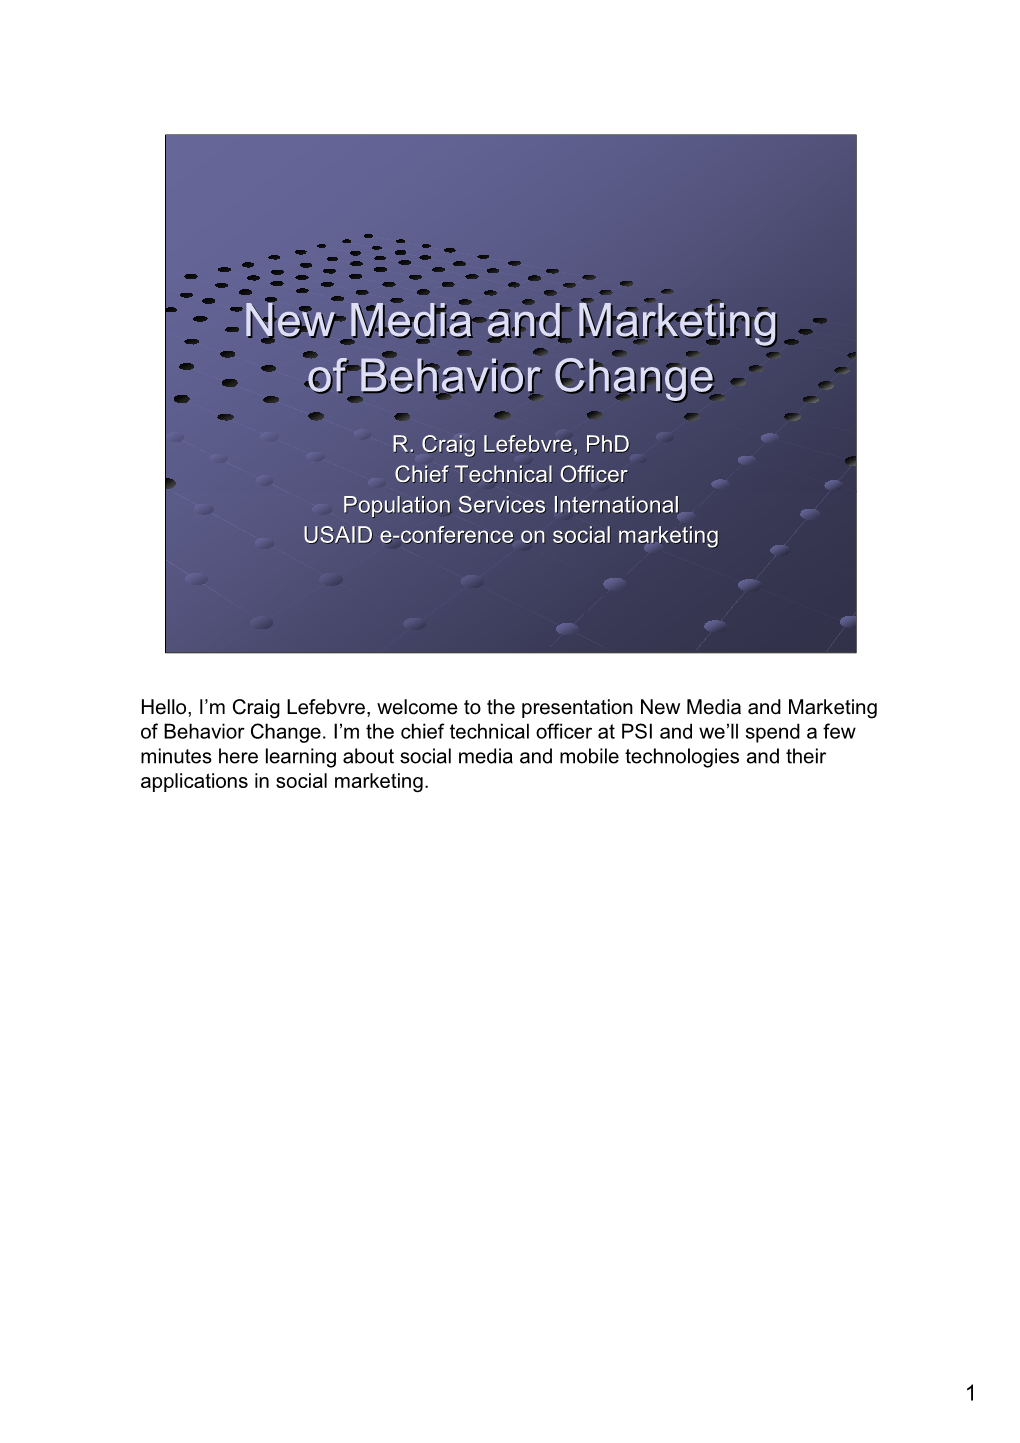 New Media and Marketing of Behavior Change